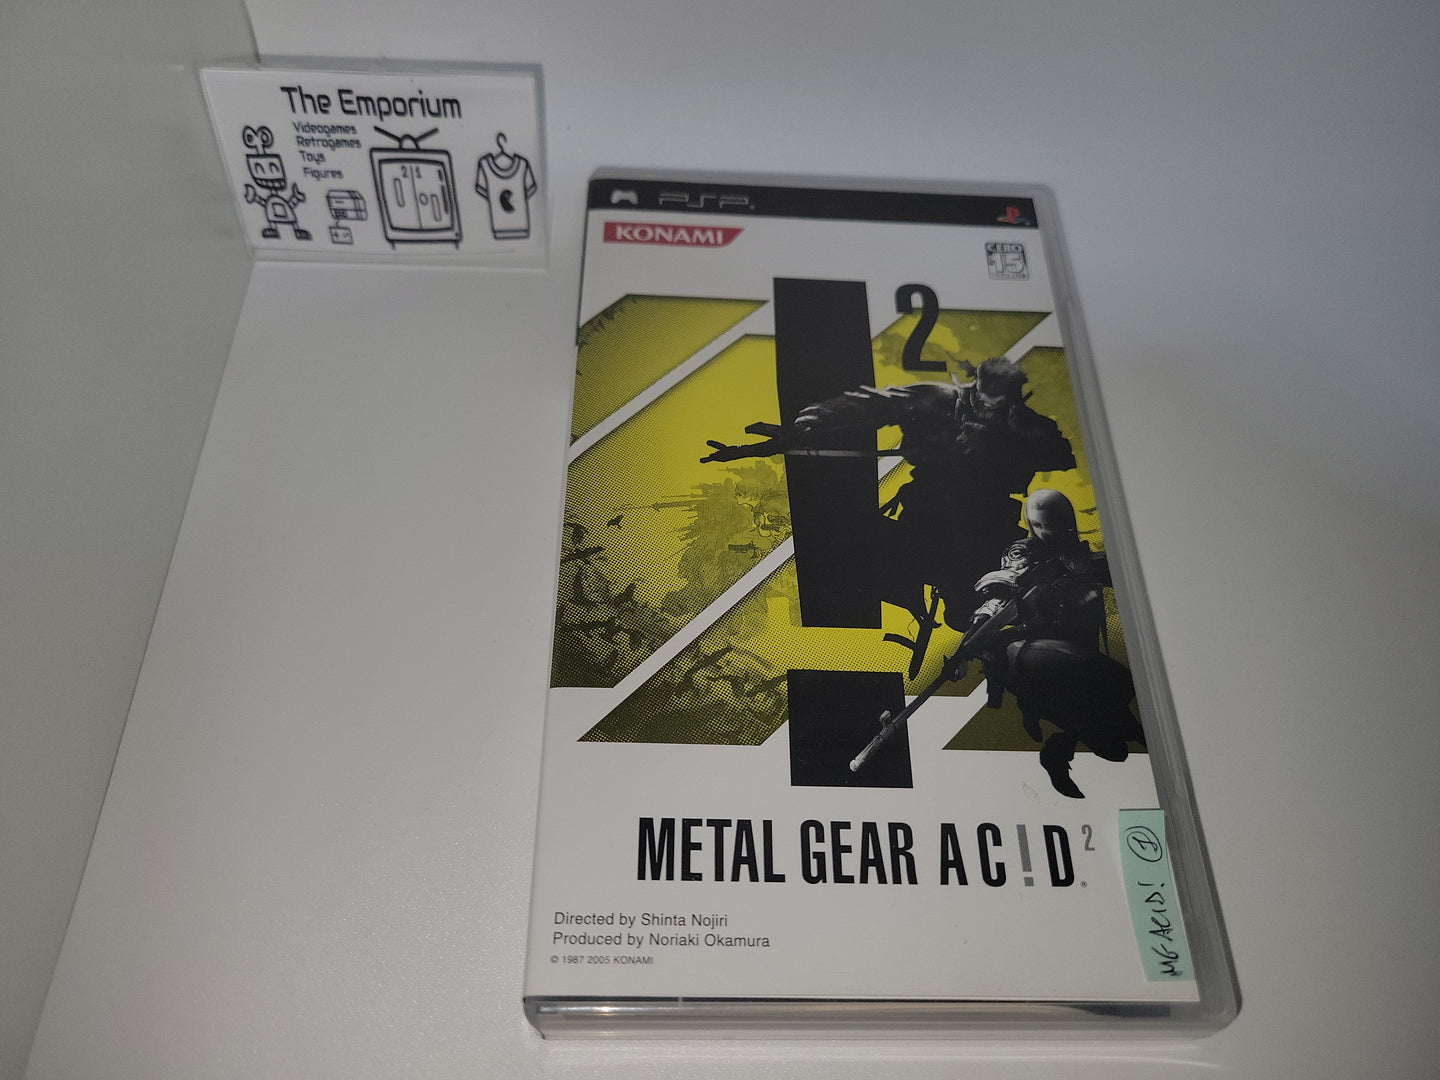 Metal Gear Acid 2 - Sony PSP Playstation Portable